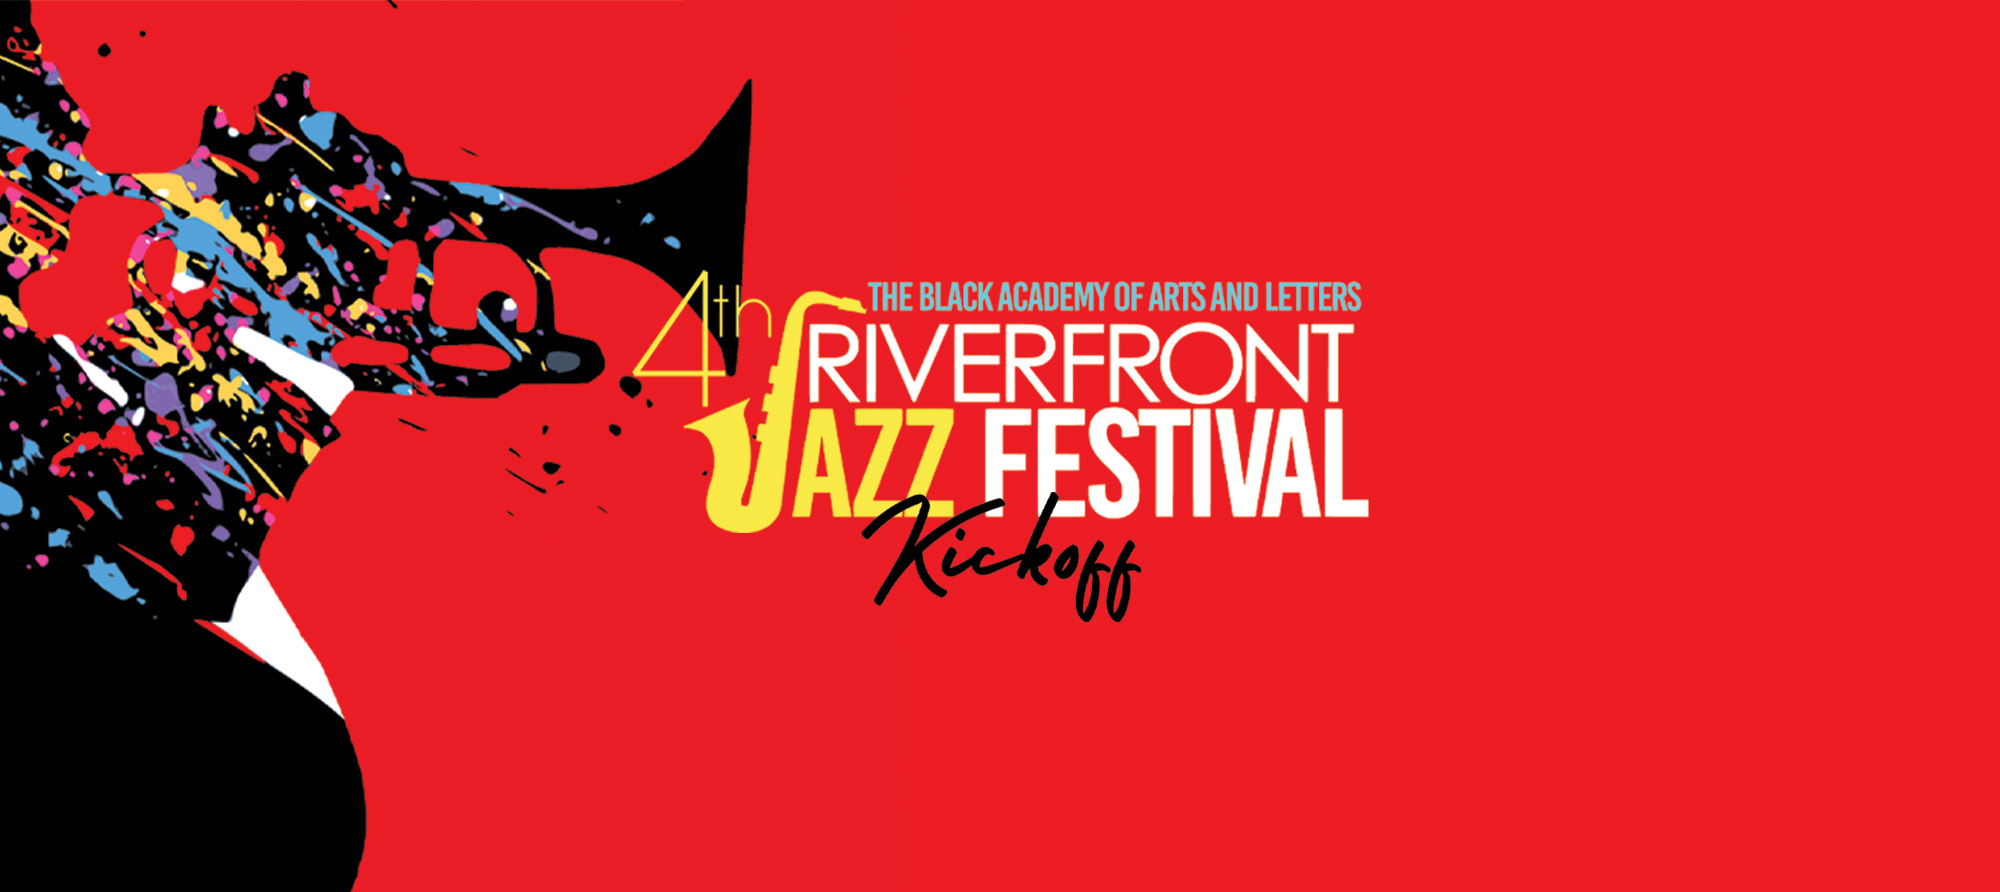 Background image for Riverfront Jazz Festival Kickoff